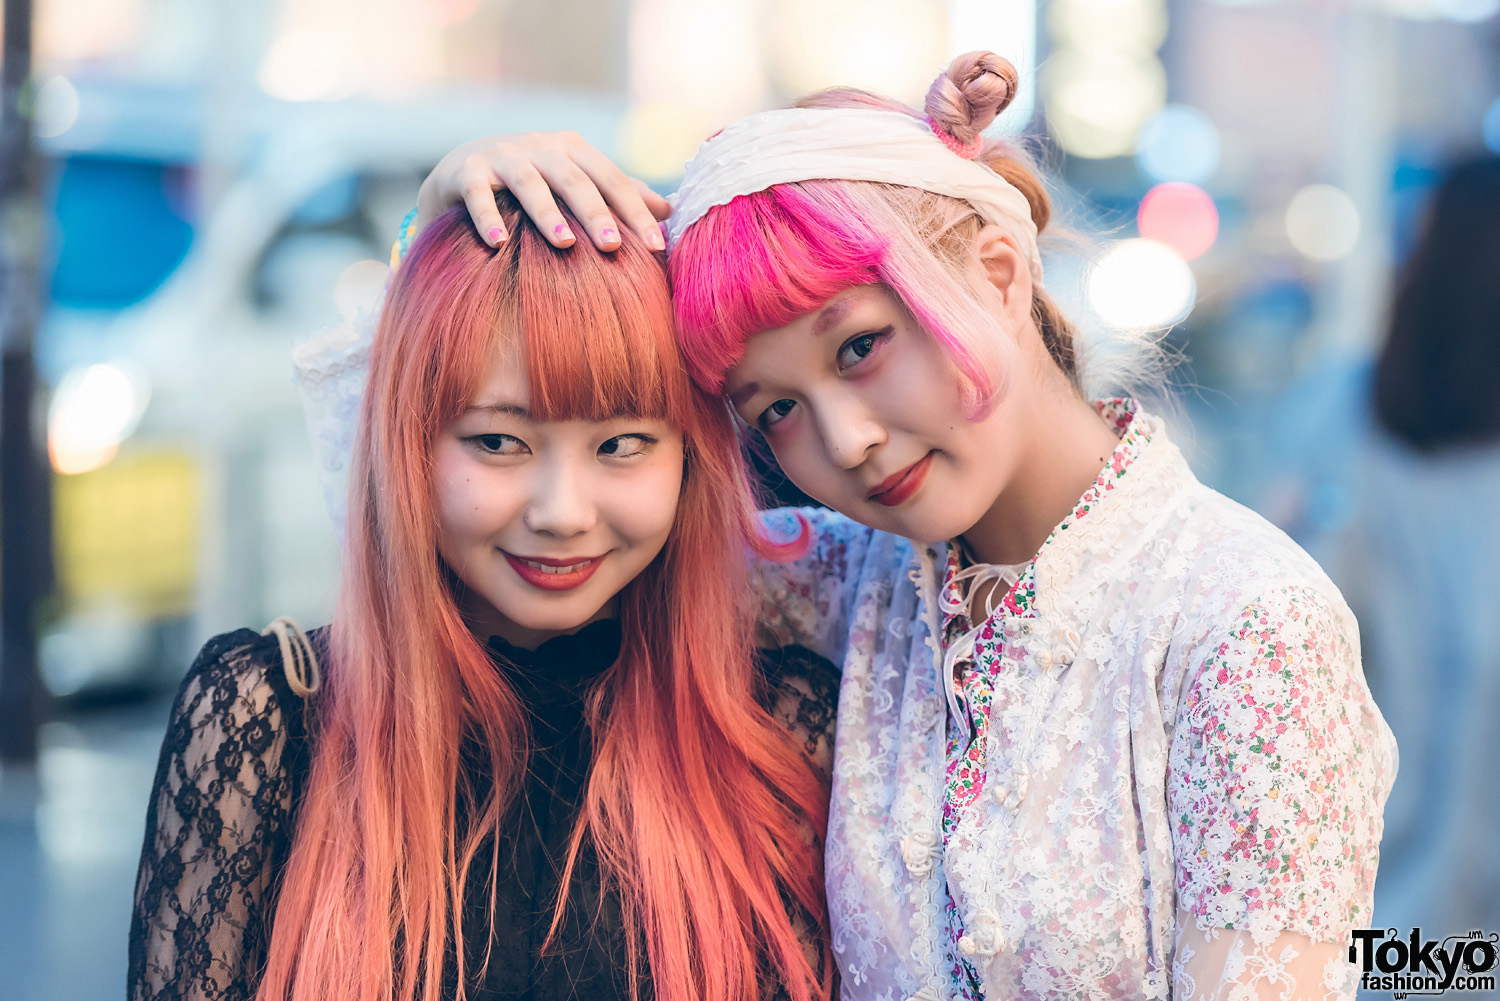 Harajuku Girls in Lace & Mixed Print Street Styles w/ Kinji, Swimmer ...